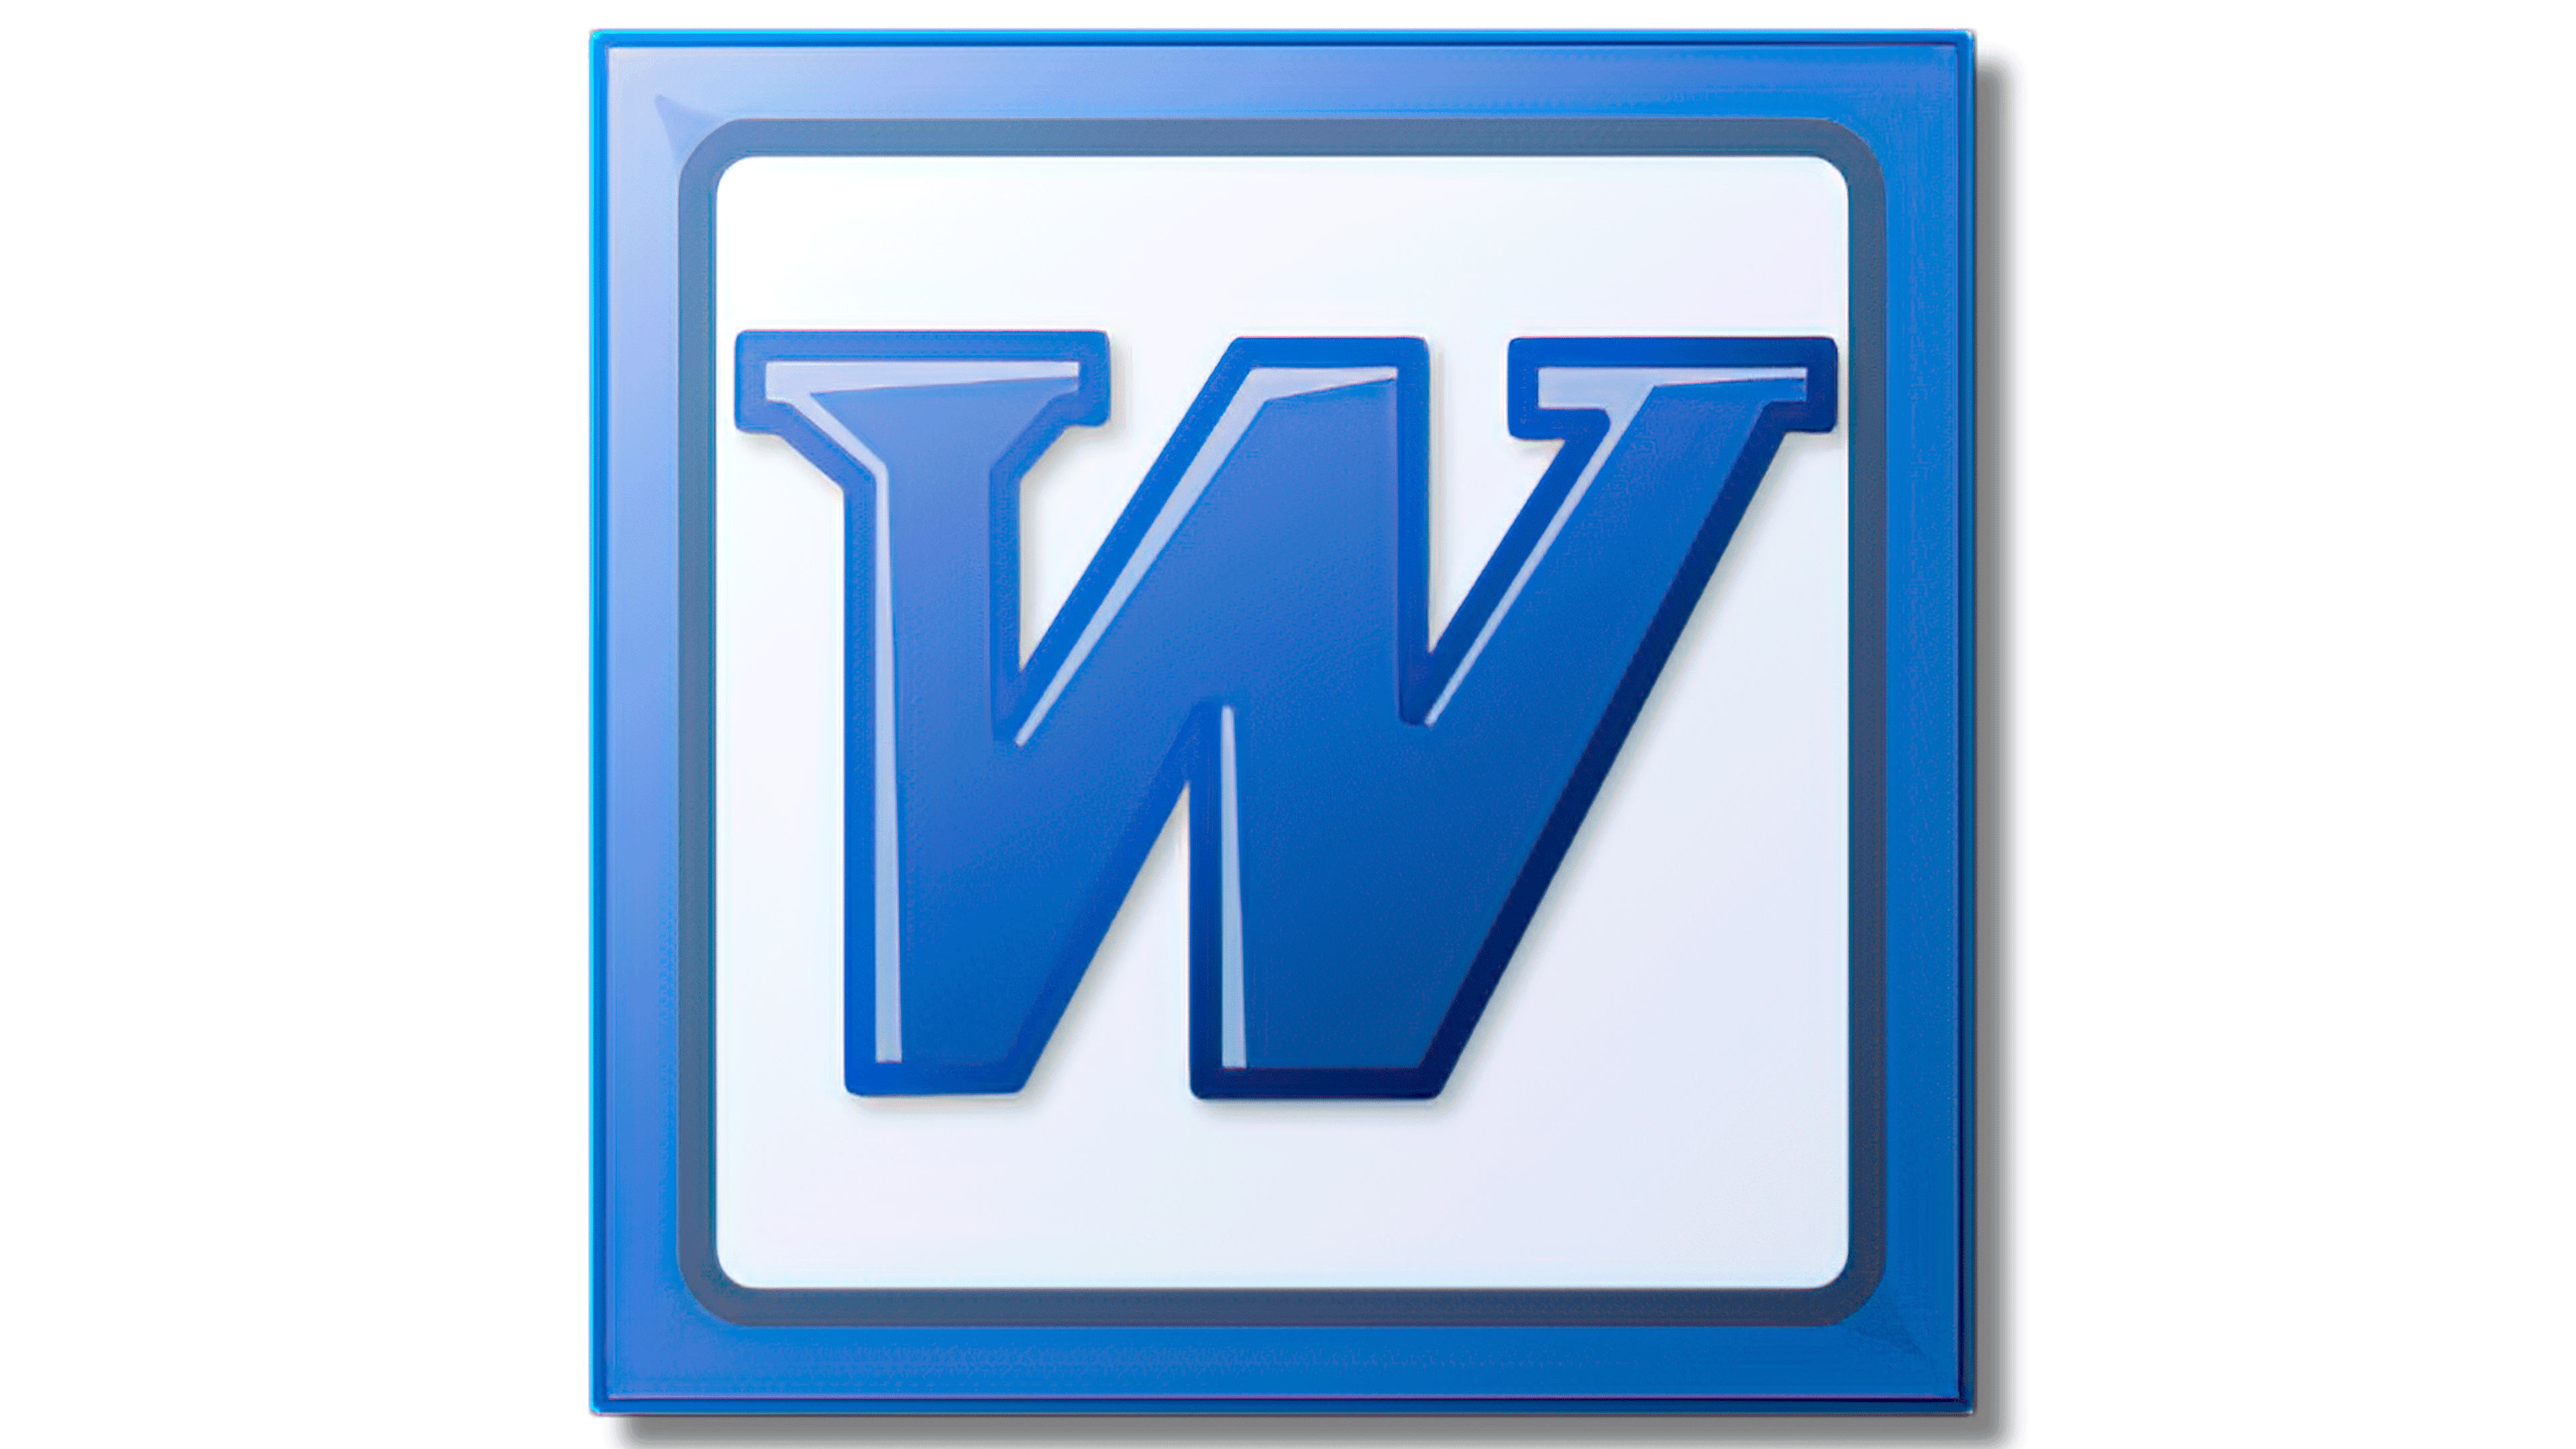 microsoft word 2007 logo